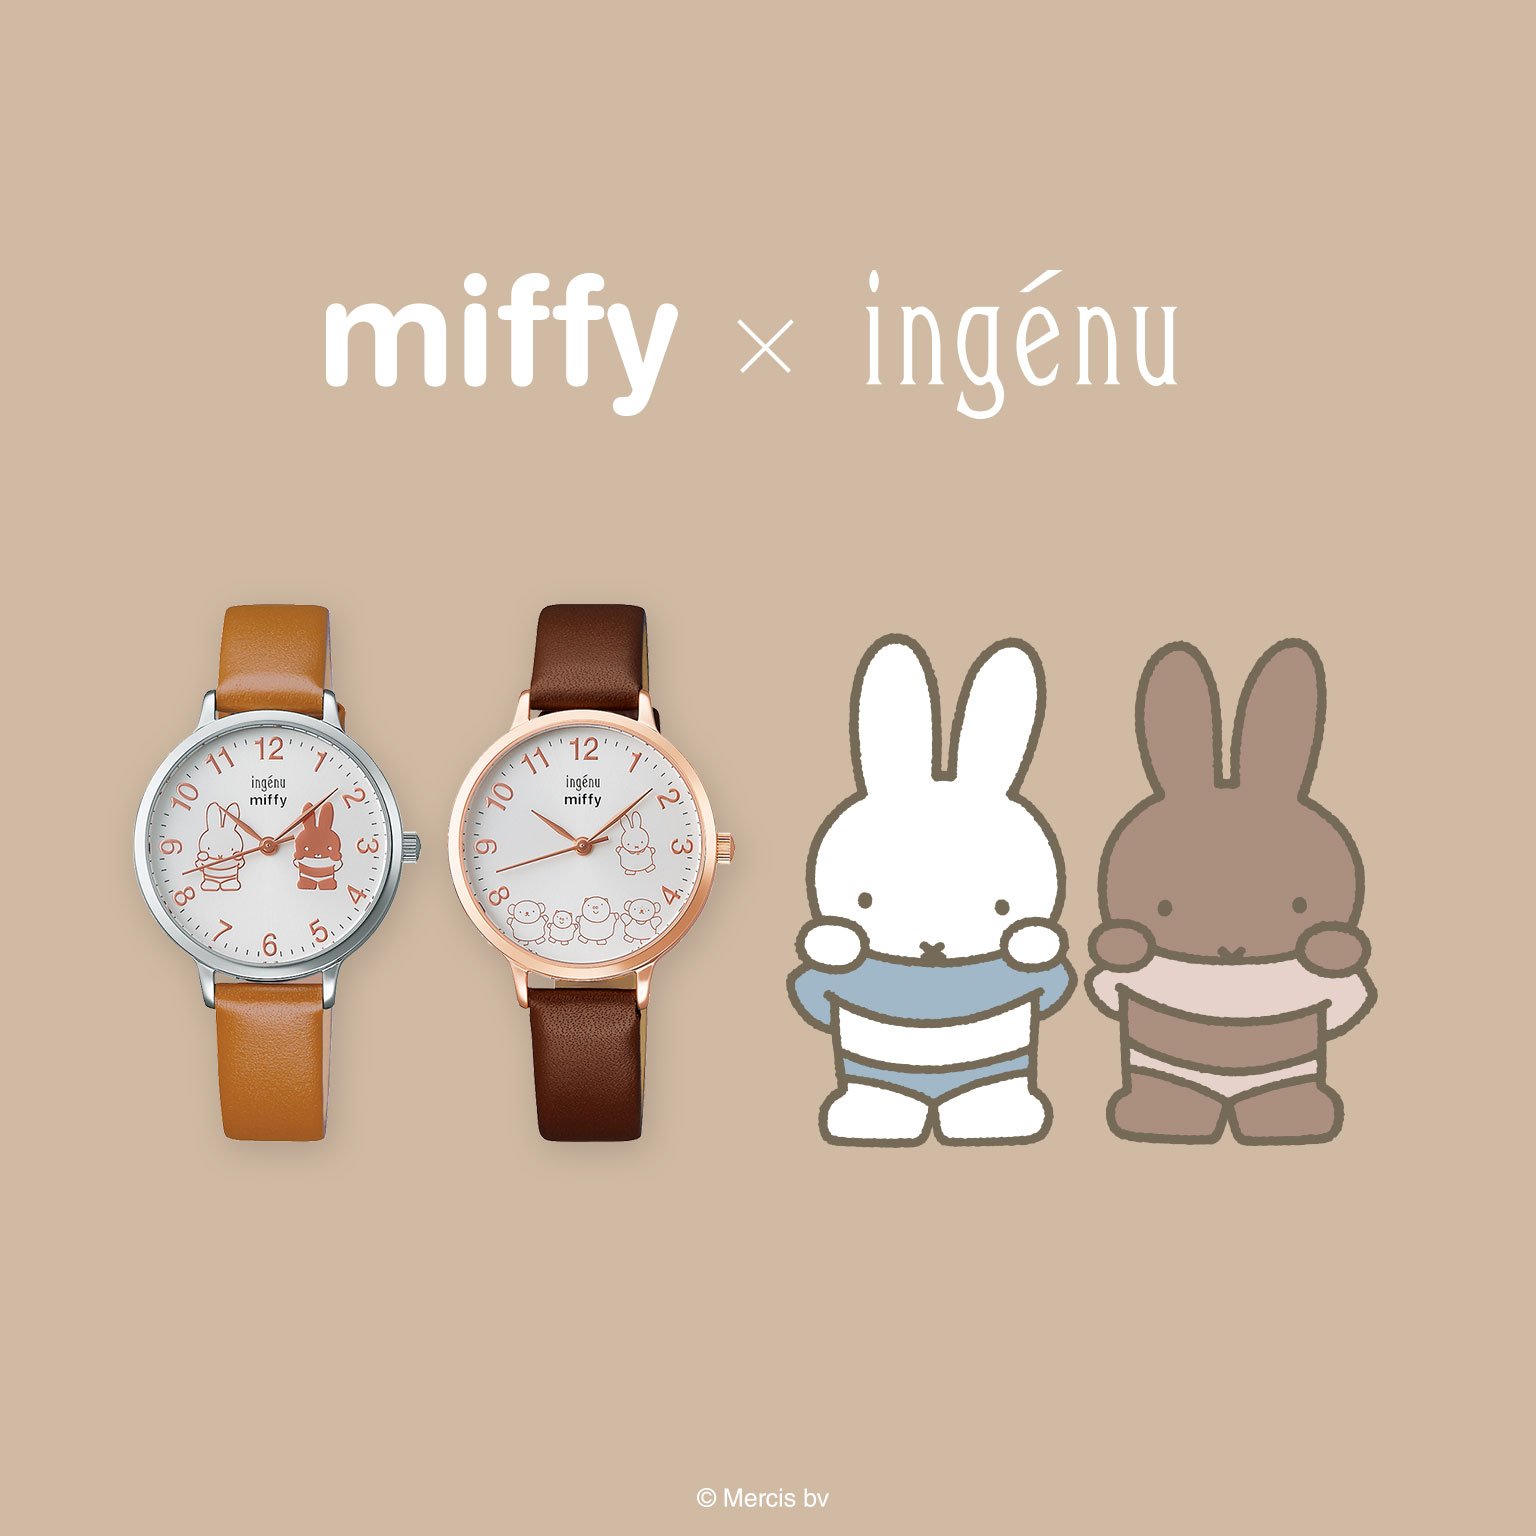 miffy × ingénu ウオッチ2種とmiffyのイラスト